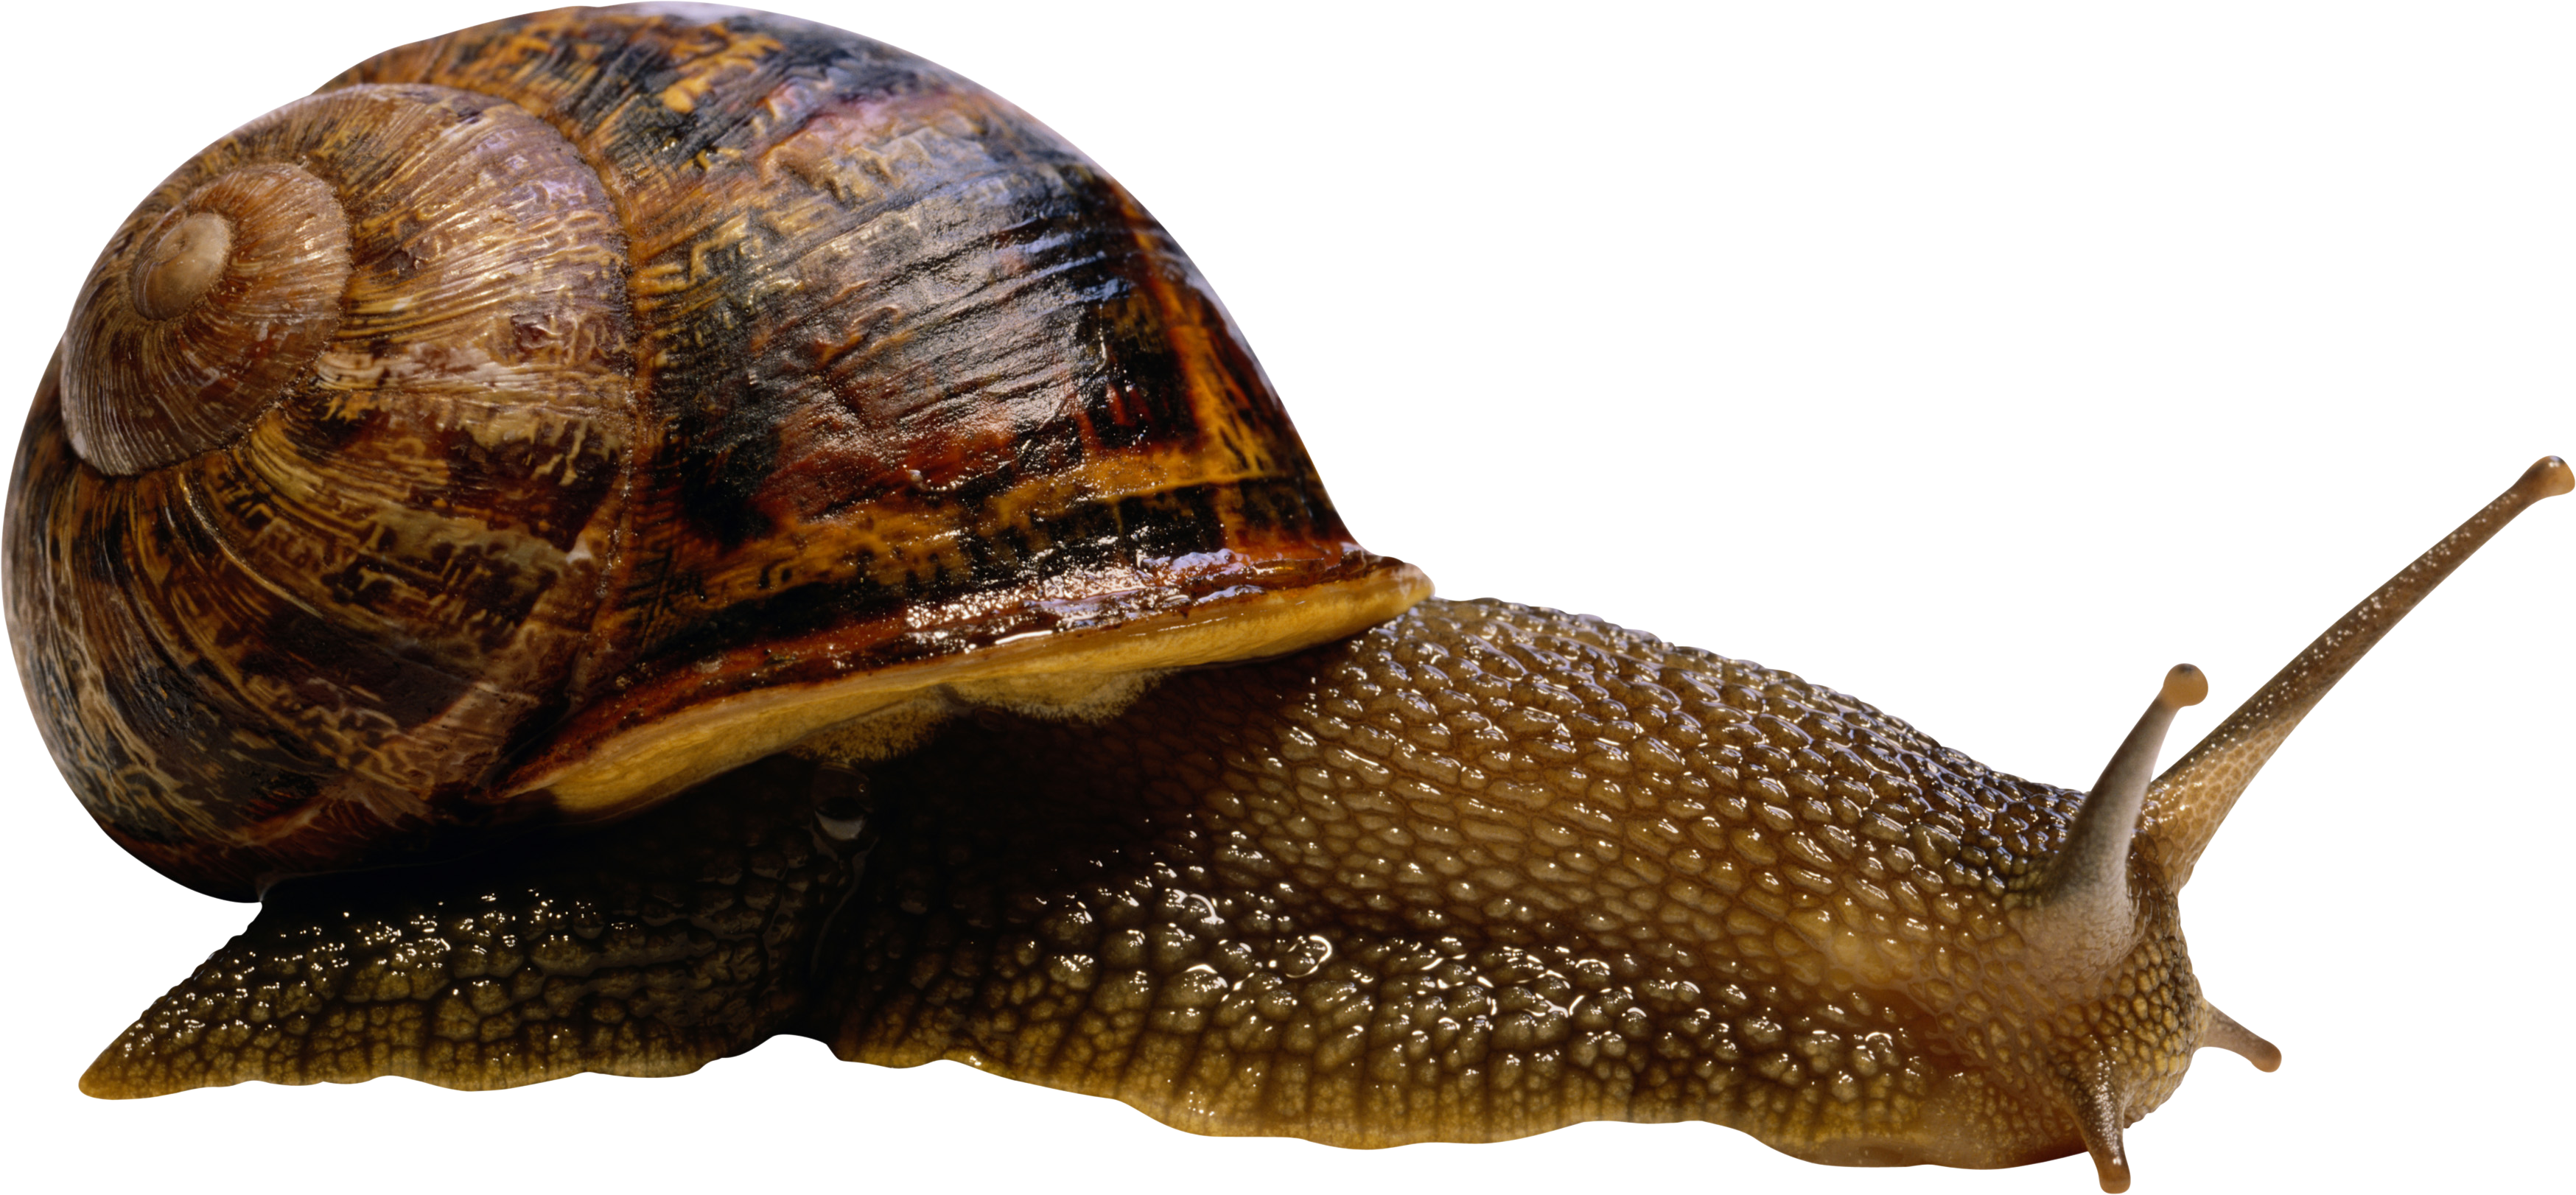 Snail HD PNG-PlusPNG.com-1574